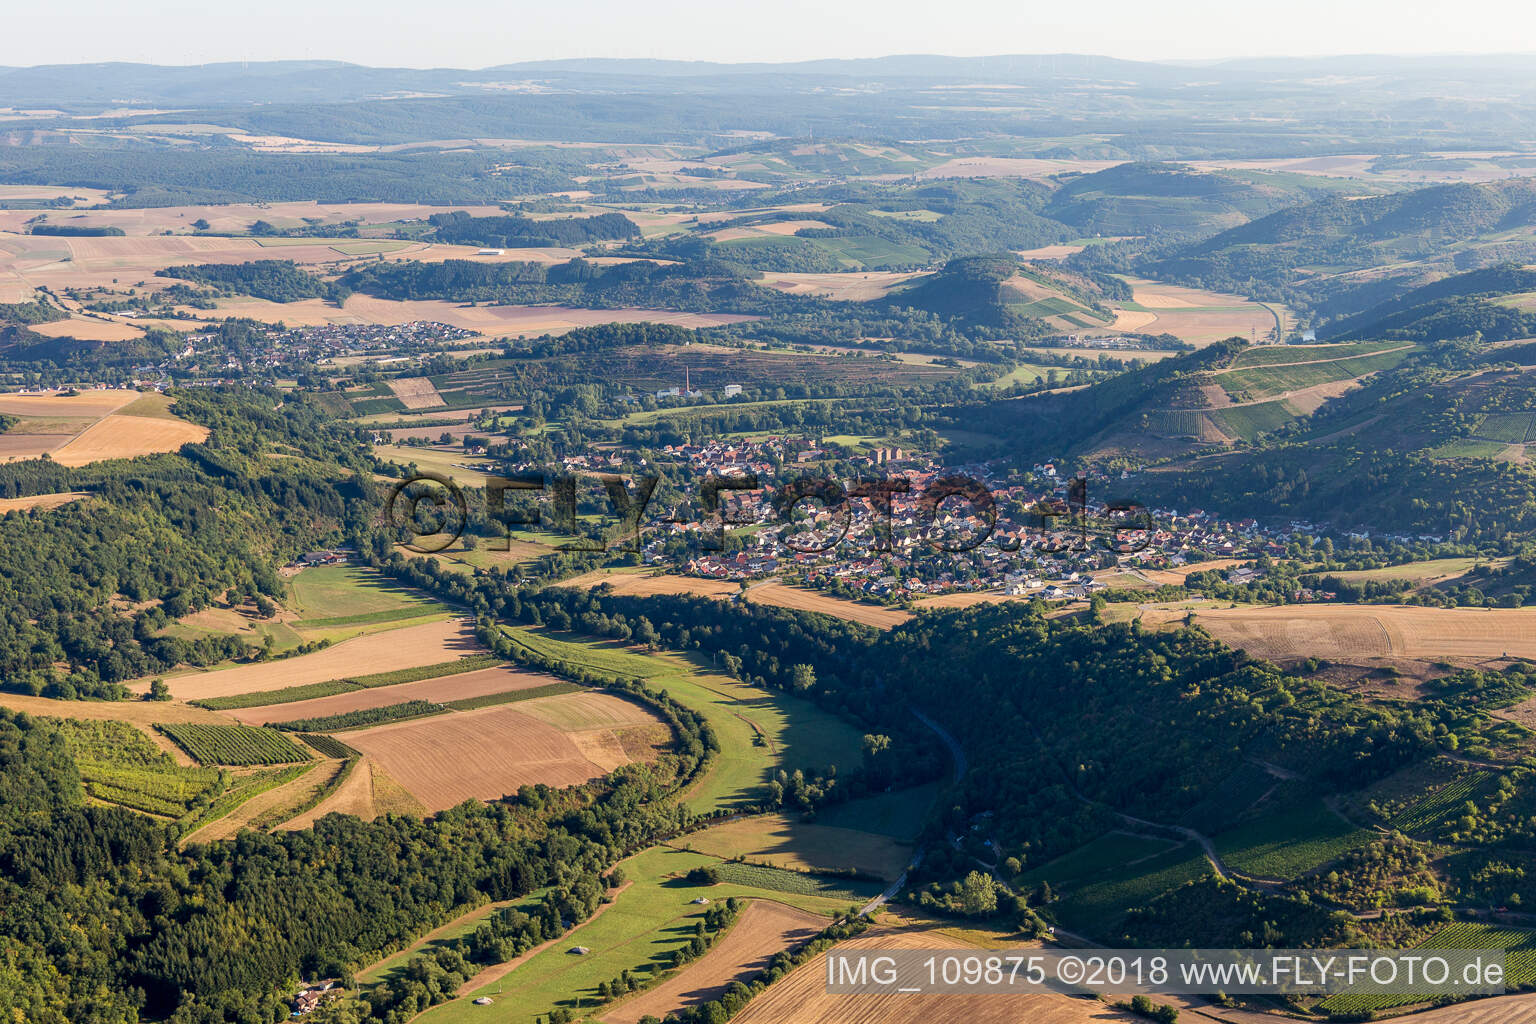 Odernheim am Glan in the state Rhineland-Palatinate, Germany